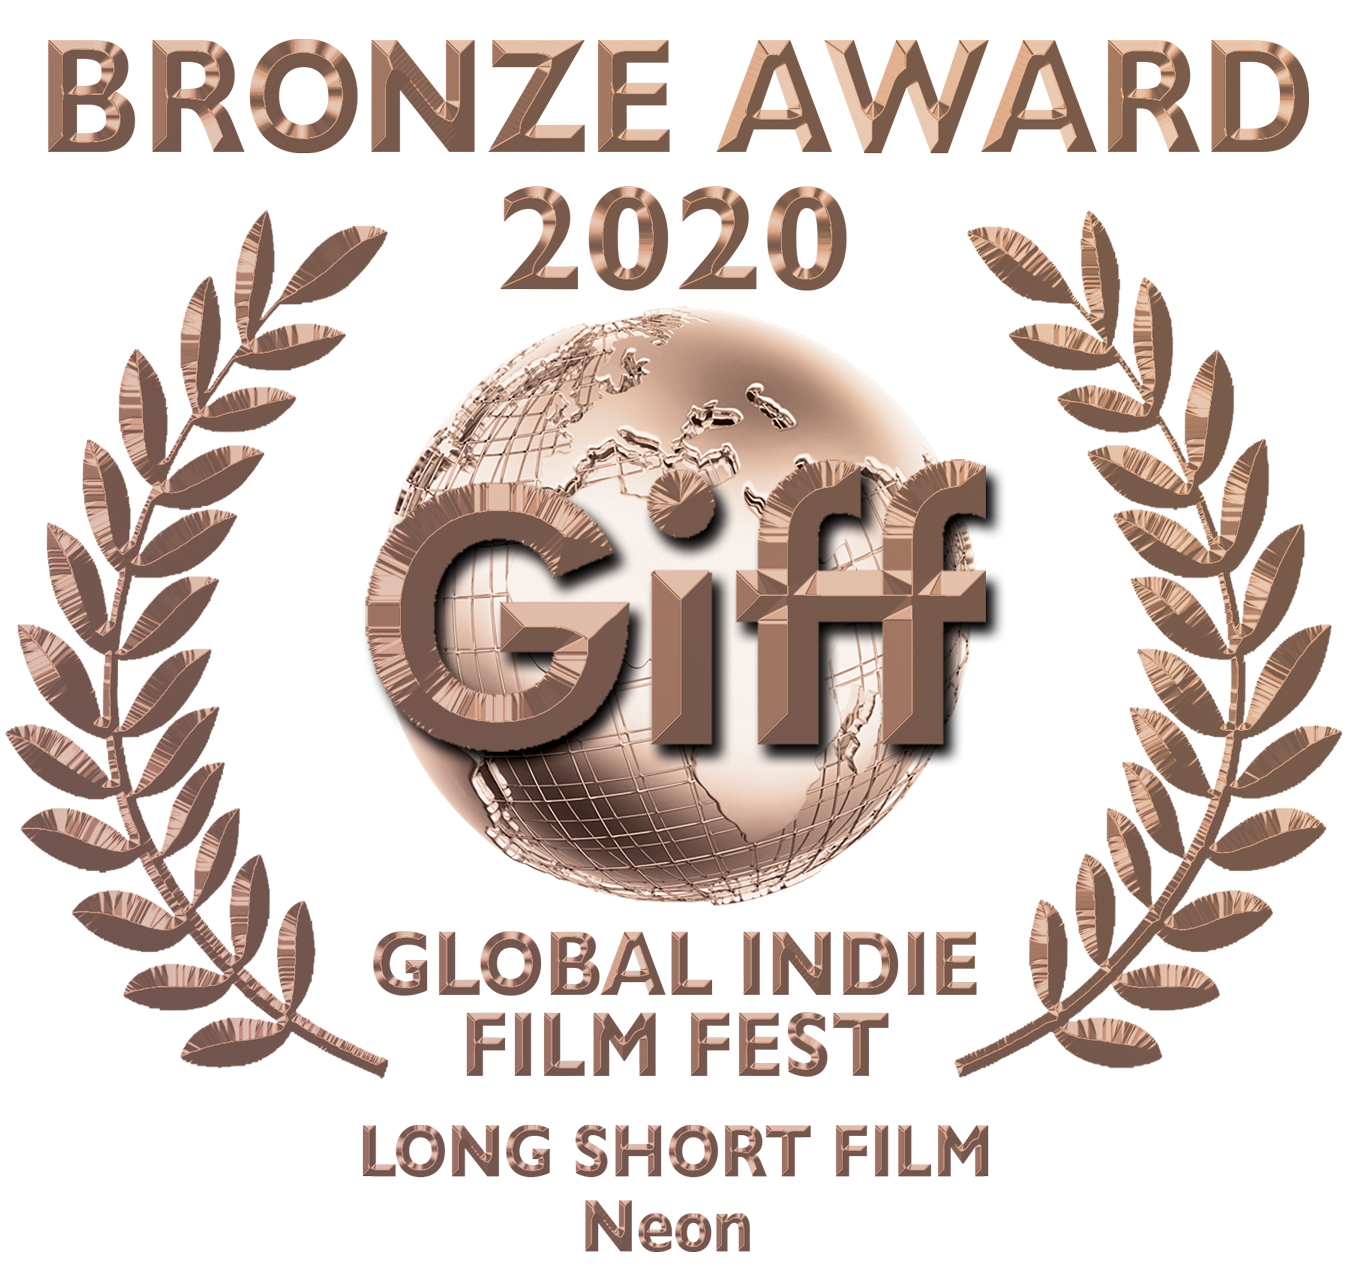 Giff-Bronze Award Long Short